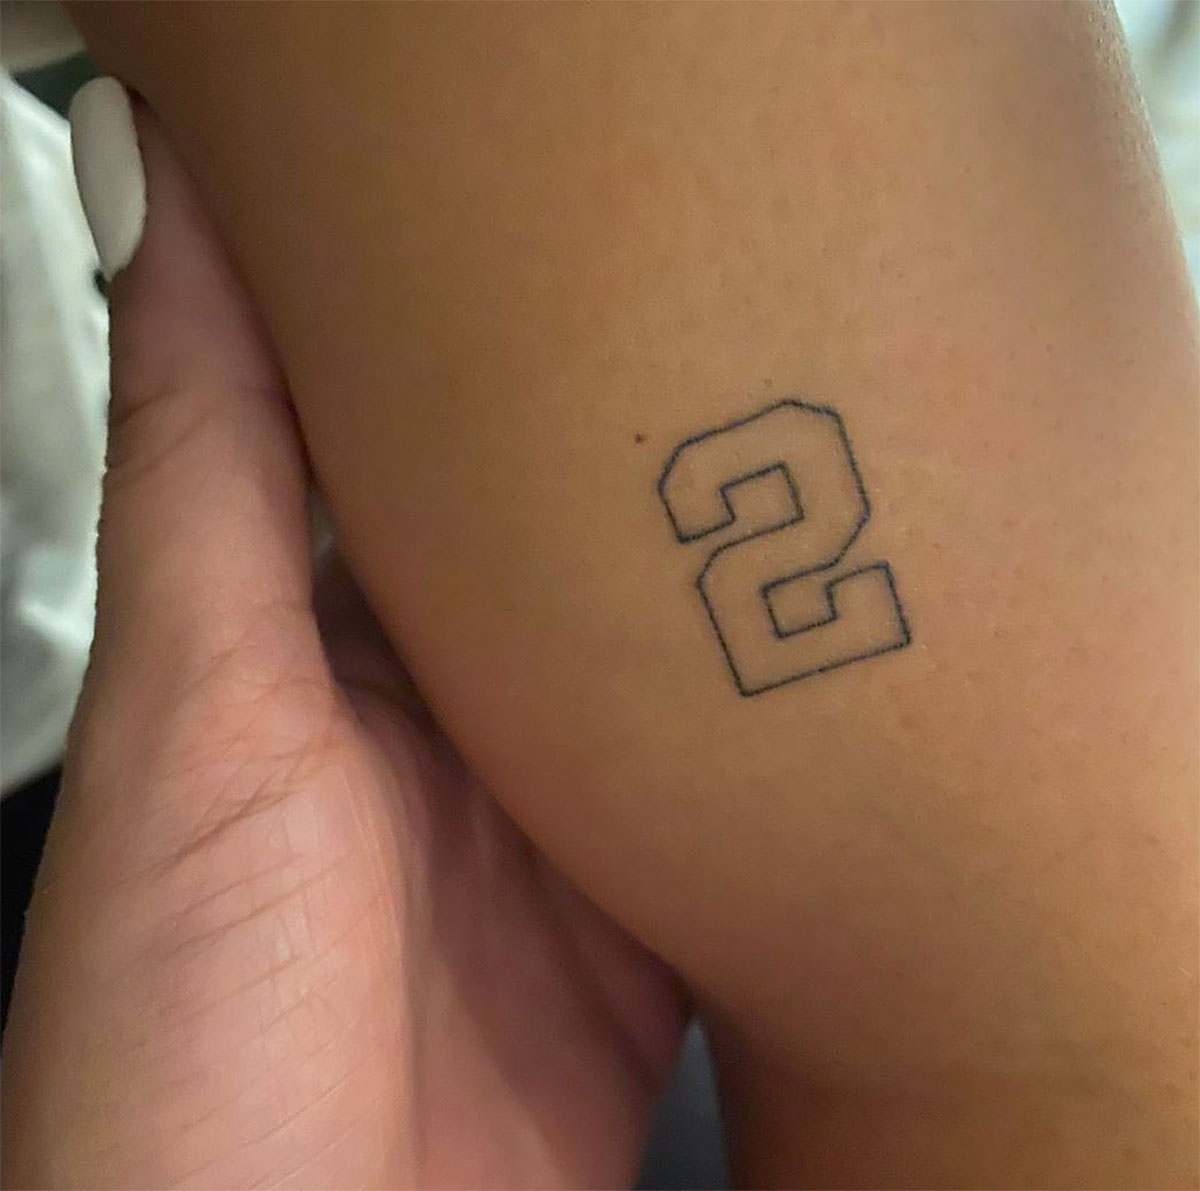 Sydney LeRoux Gets Tattoo Honoring Kobe Bryant and Gianna